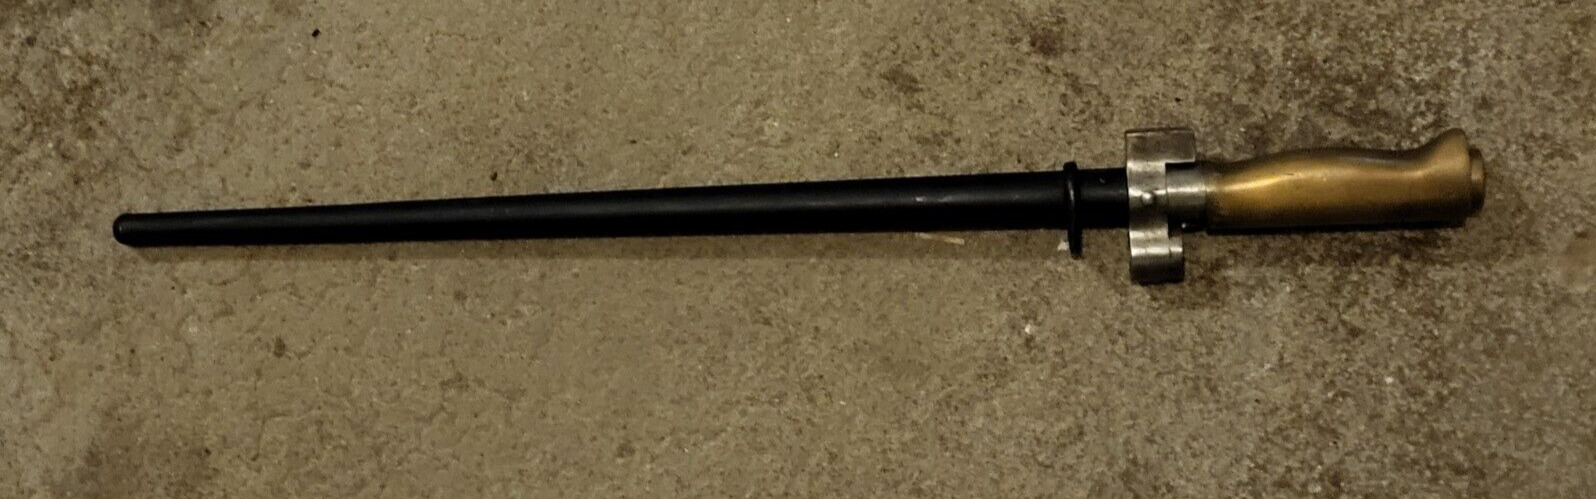 Rifle Bayonet with Sheath - Vintage / Antique